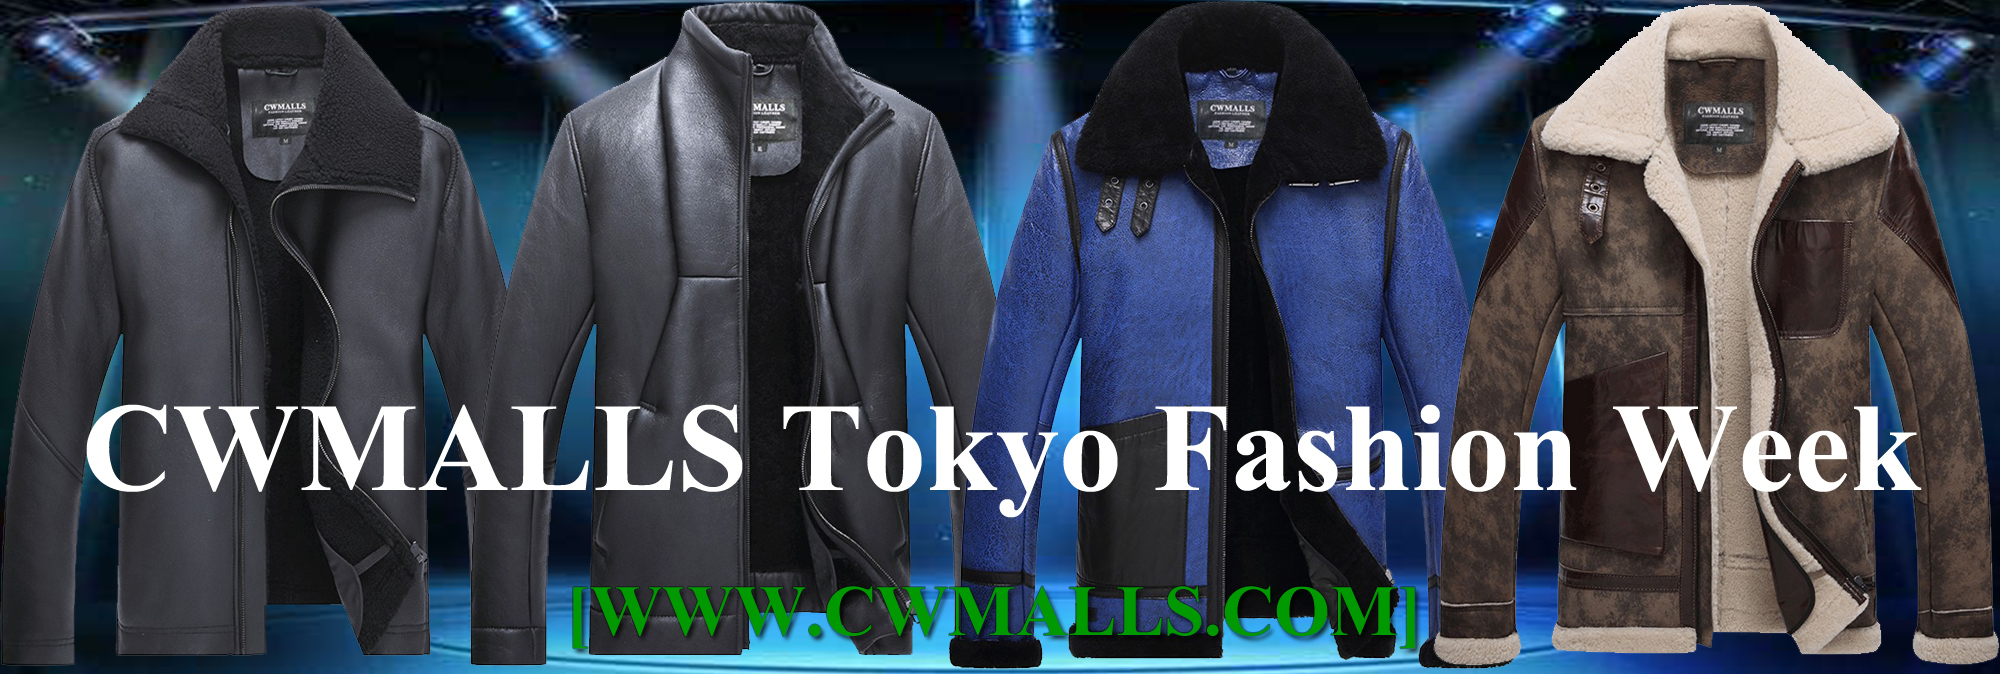 CWMALLS Tokyo Fashion Week products